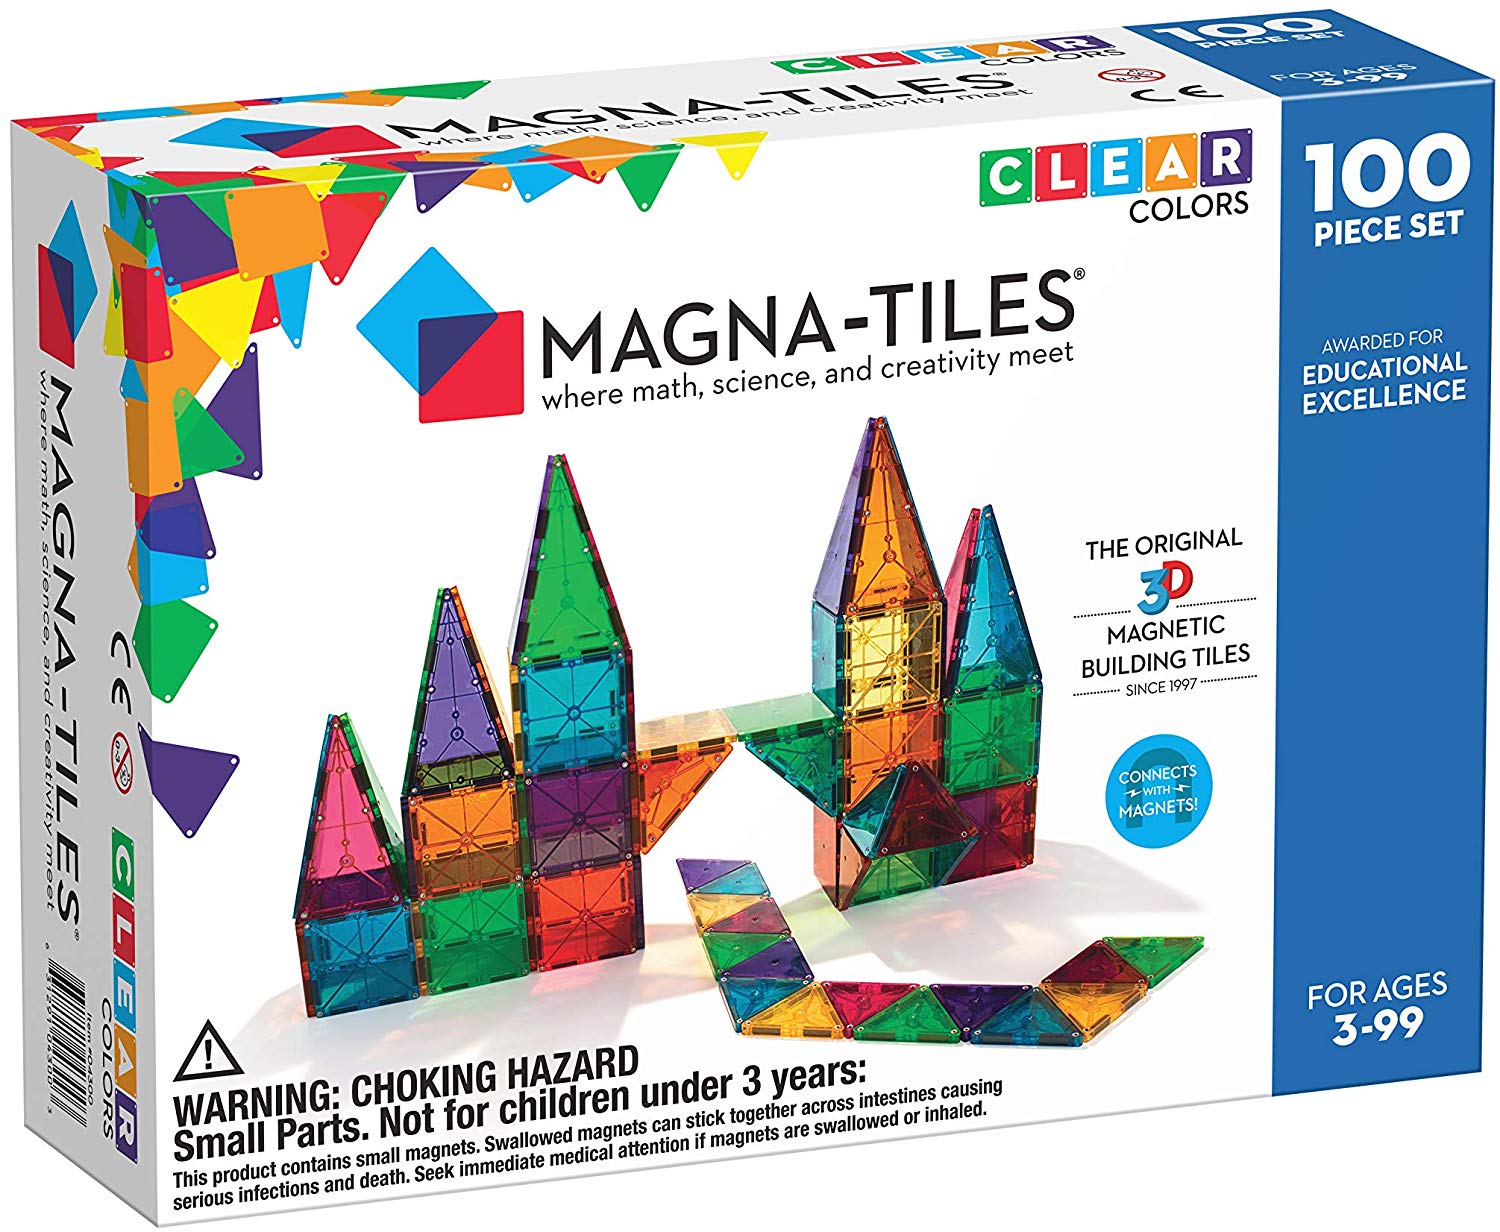 MagnaTiles Clear Colors 100 Piece Set Only 89.99